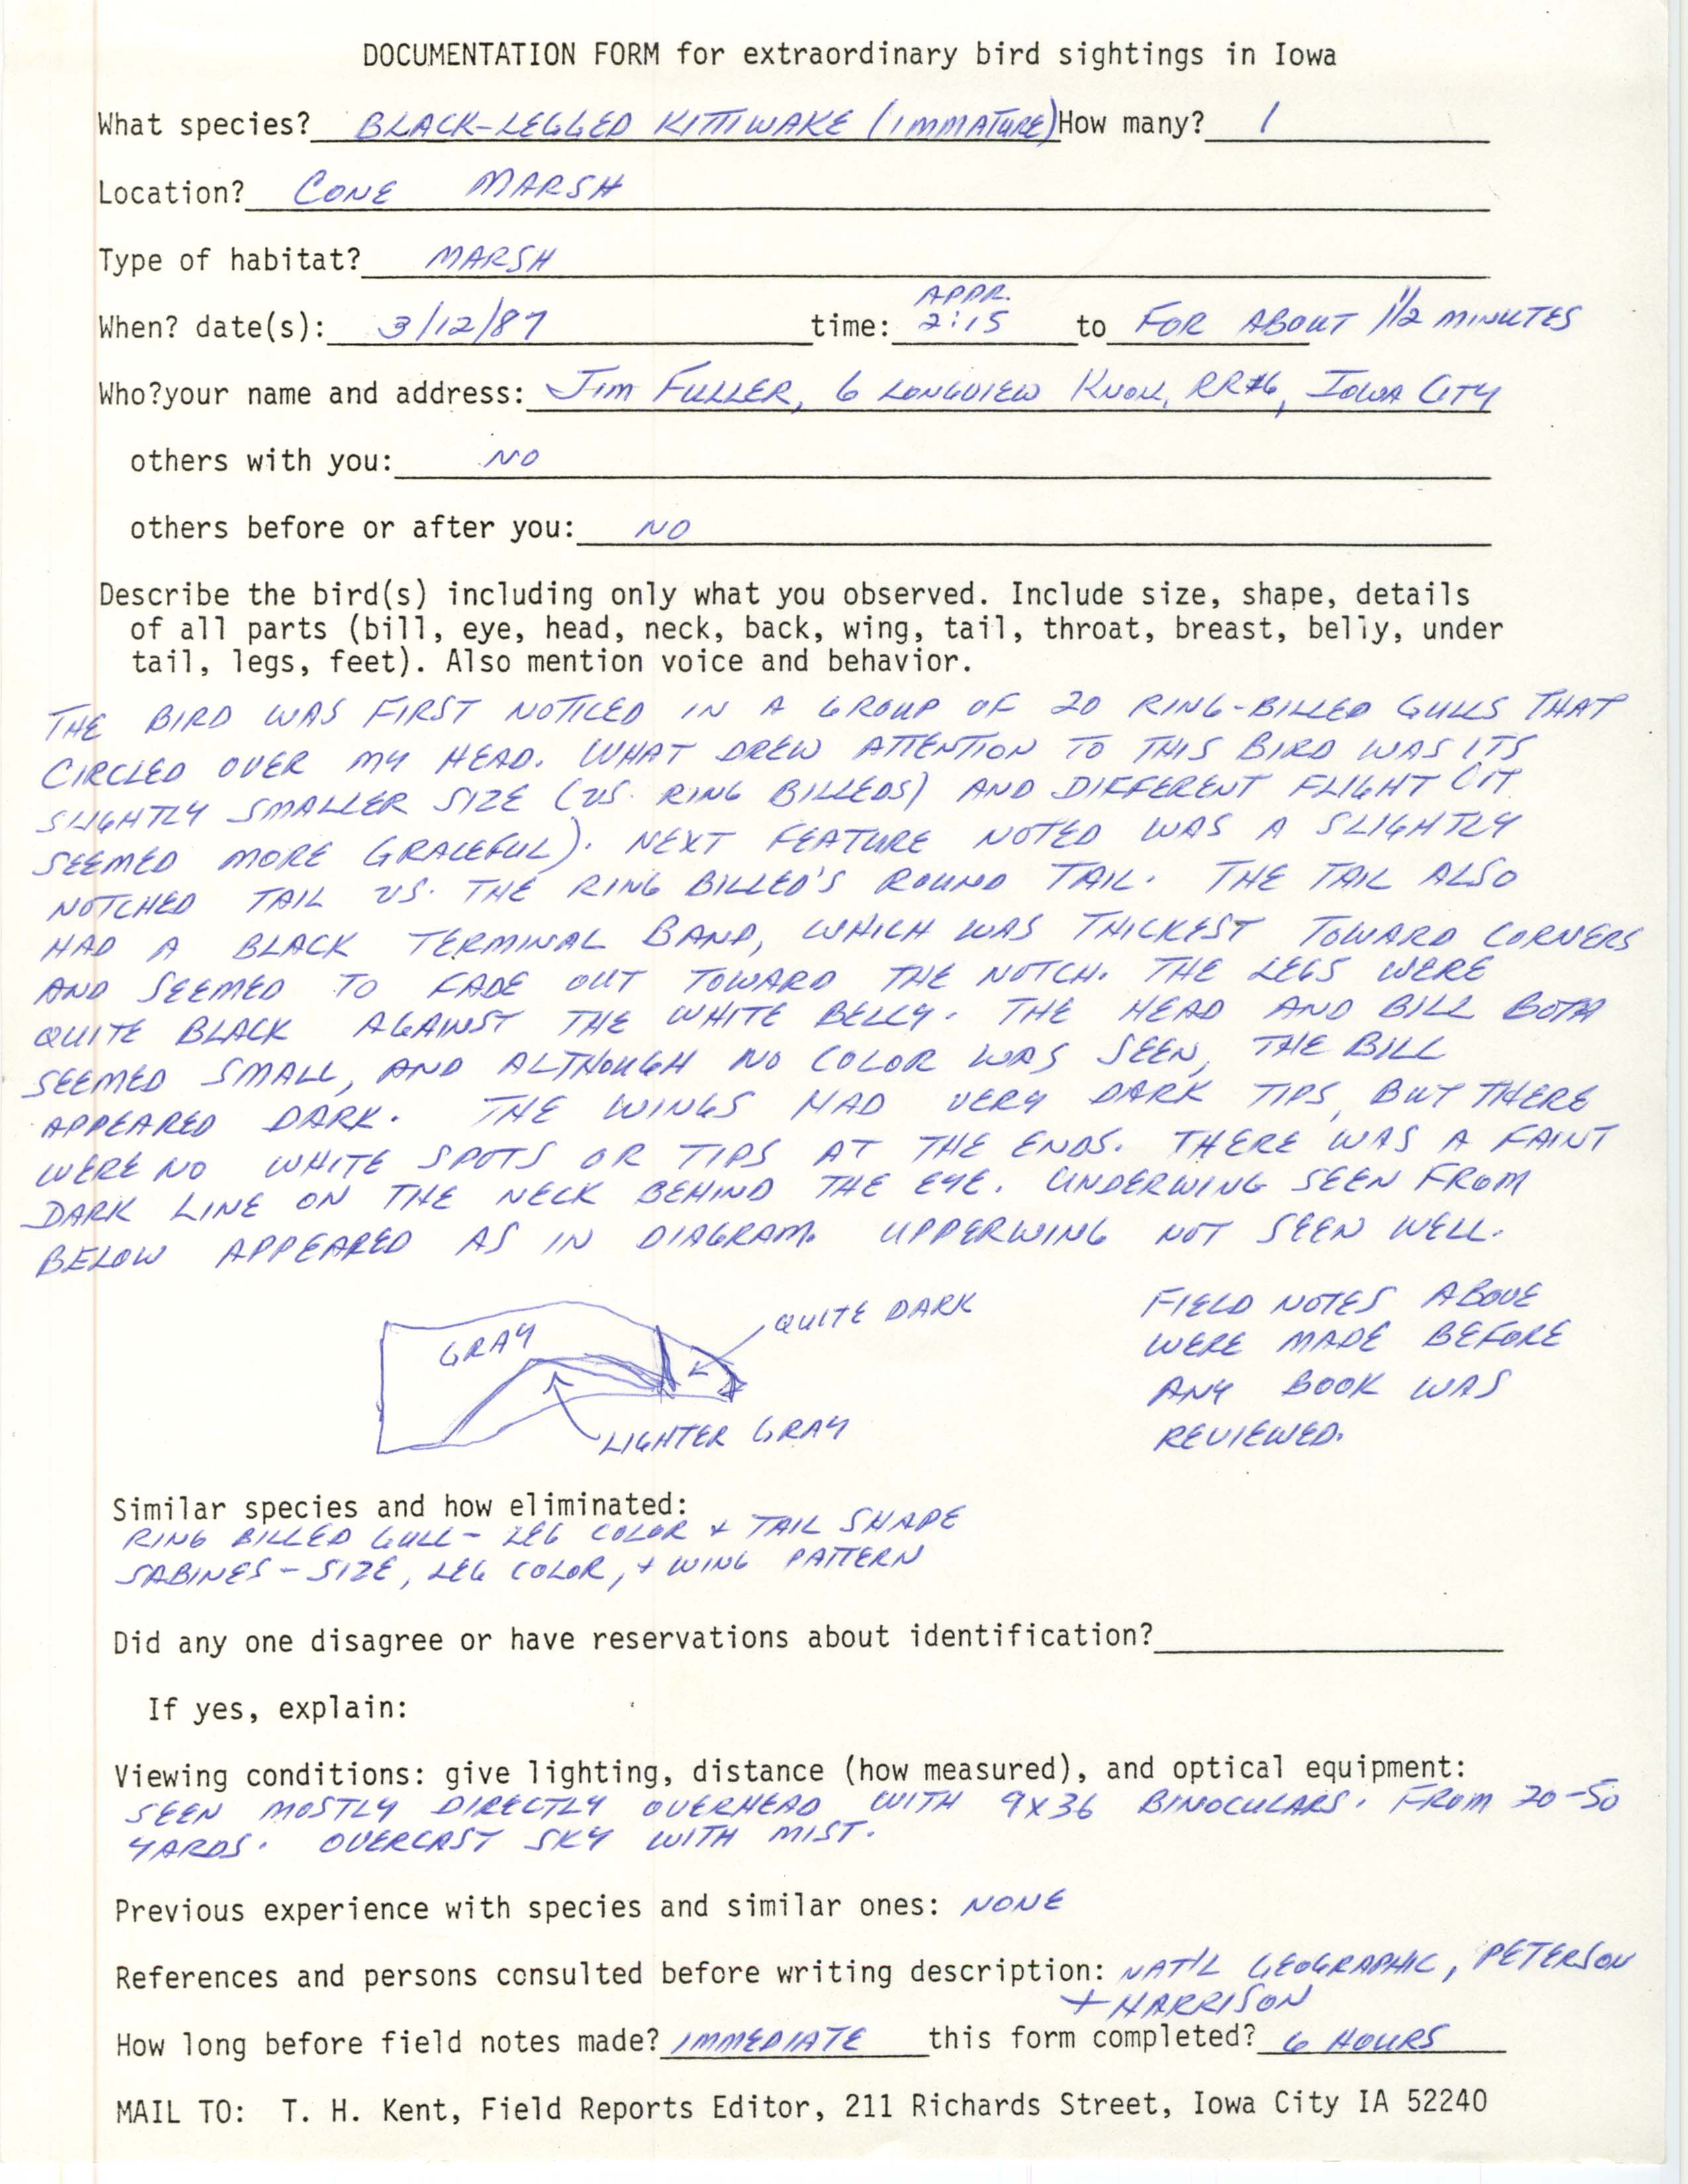 Rare bird documentation form for Black-legged Kittiwake at Cone Marsh, 1987